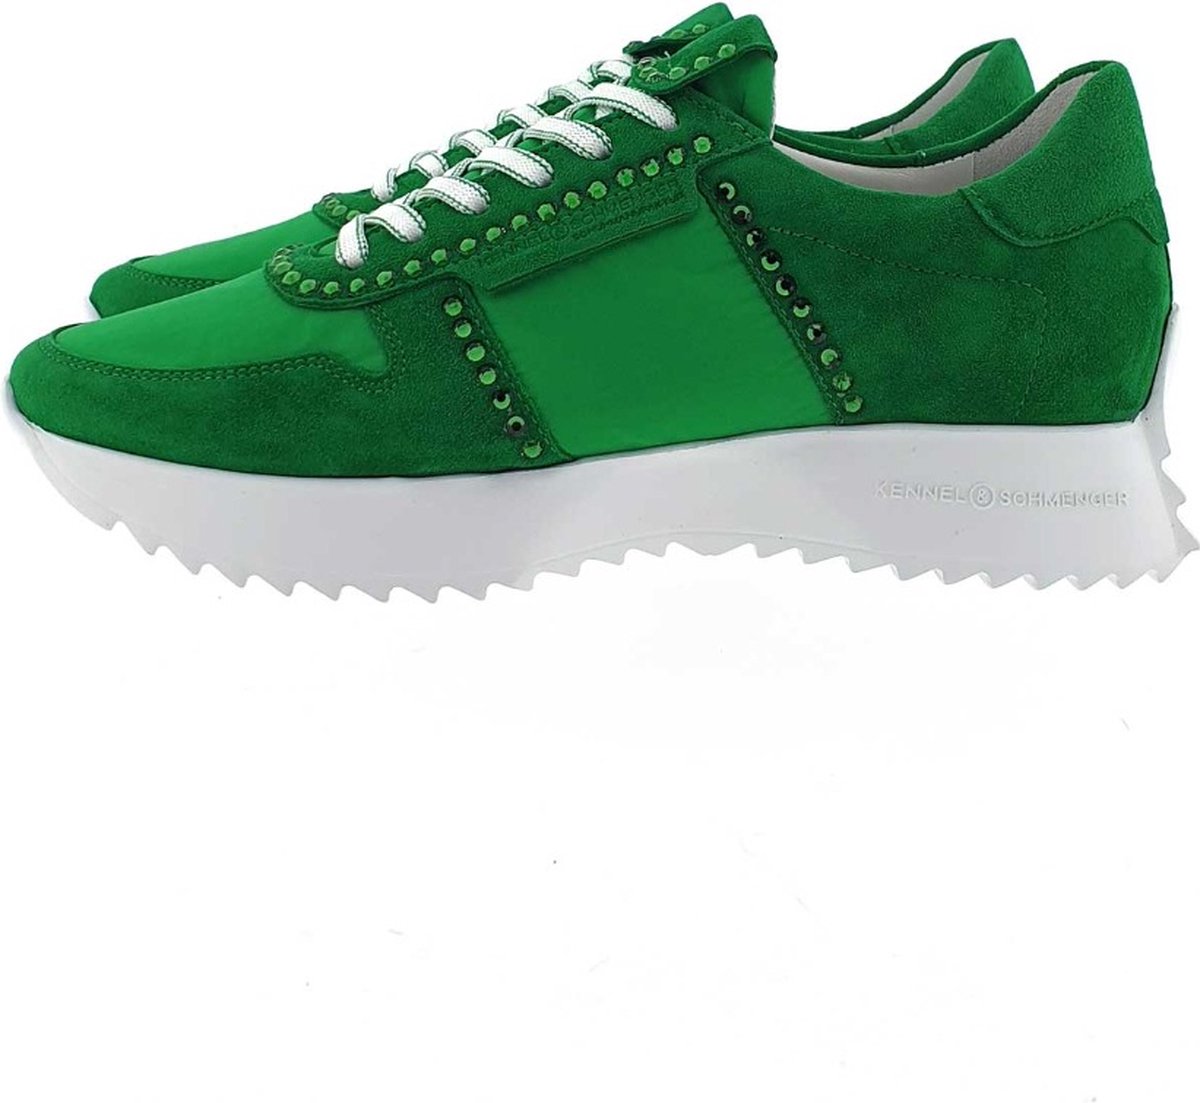 Kennel & Schmenger 18070 sneaker met strass groen, 37.5 / 4.5